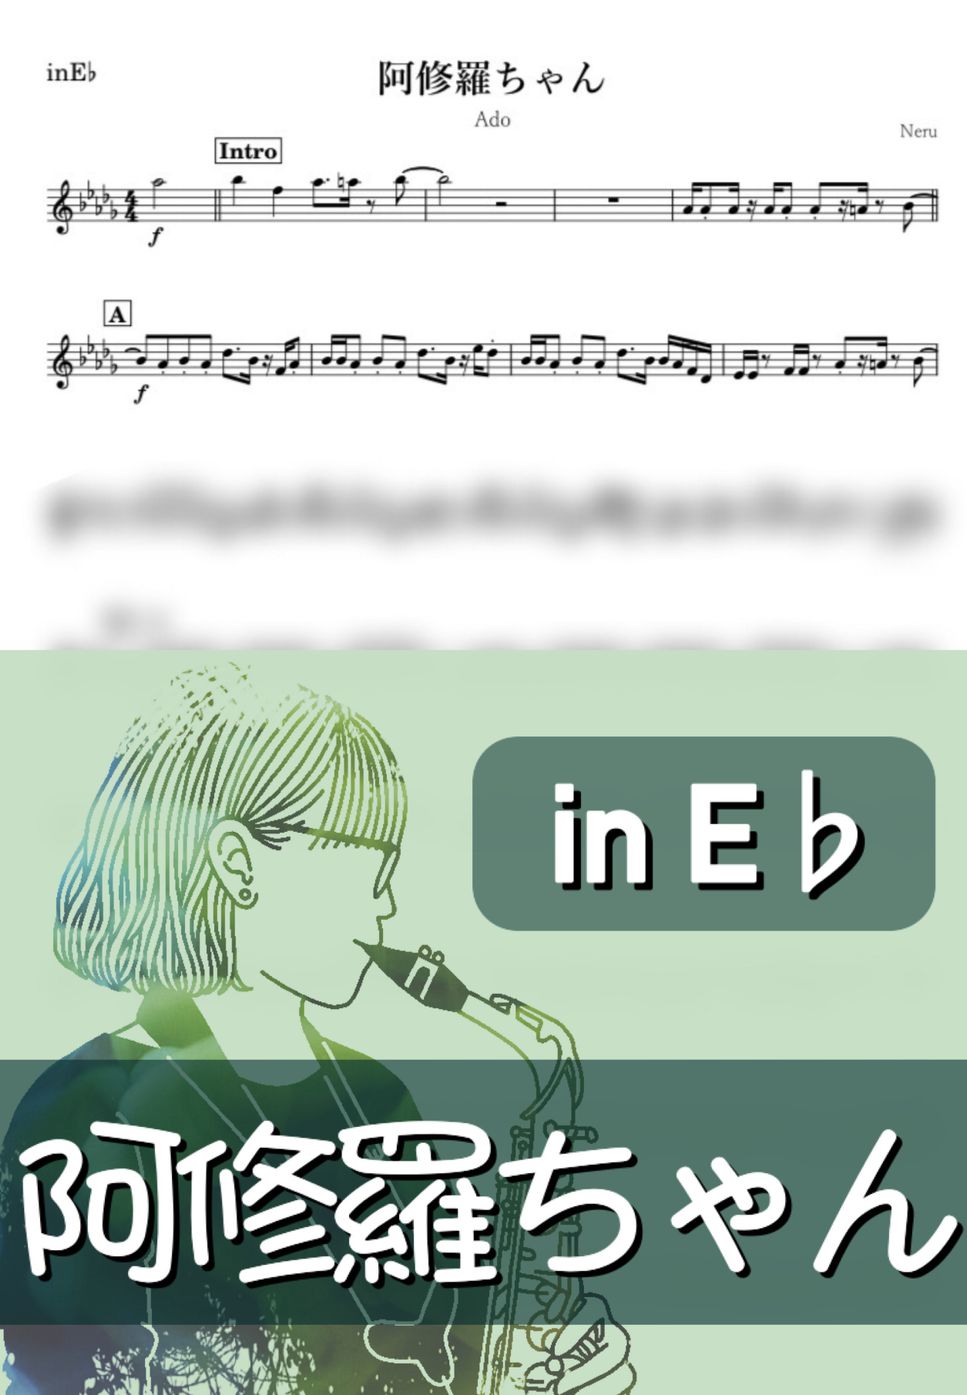 Ado - 阿修羅ちゃん (E♭) by kanamusic